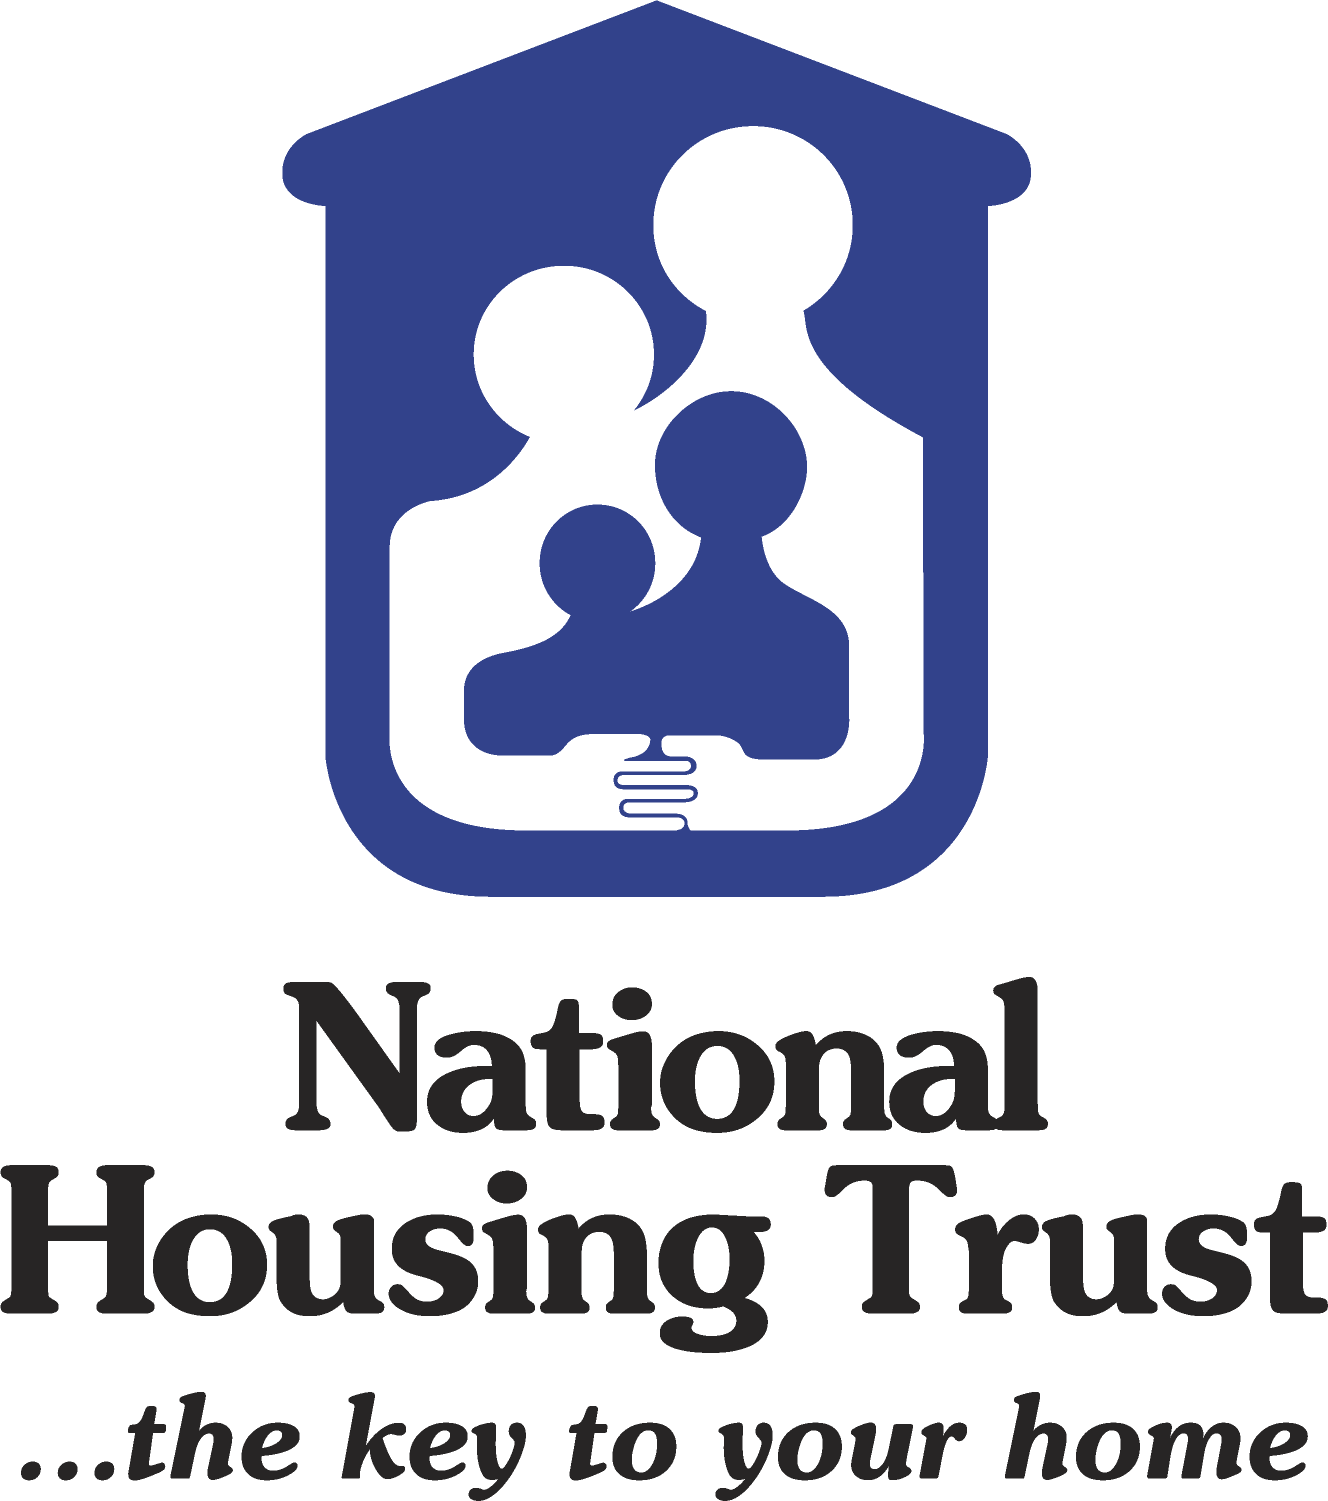 National Housing Trust